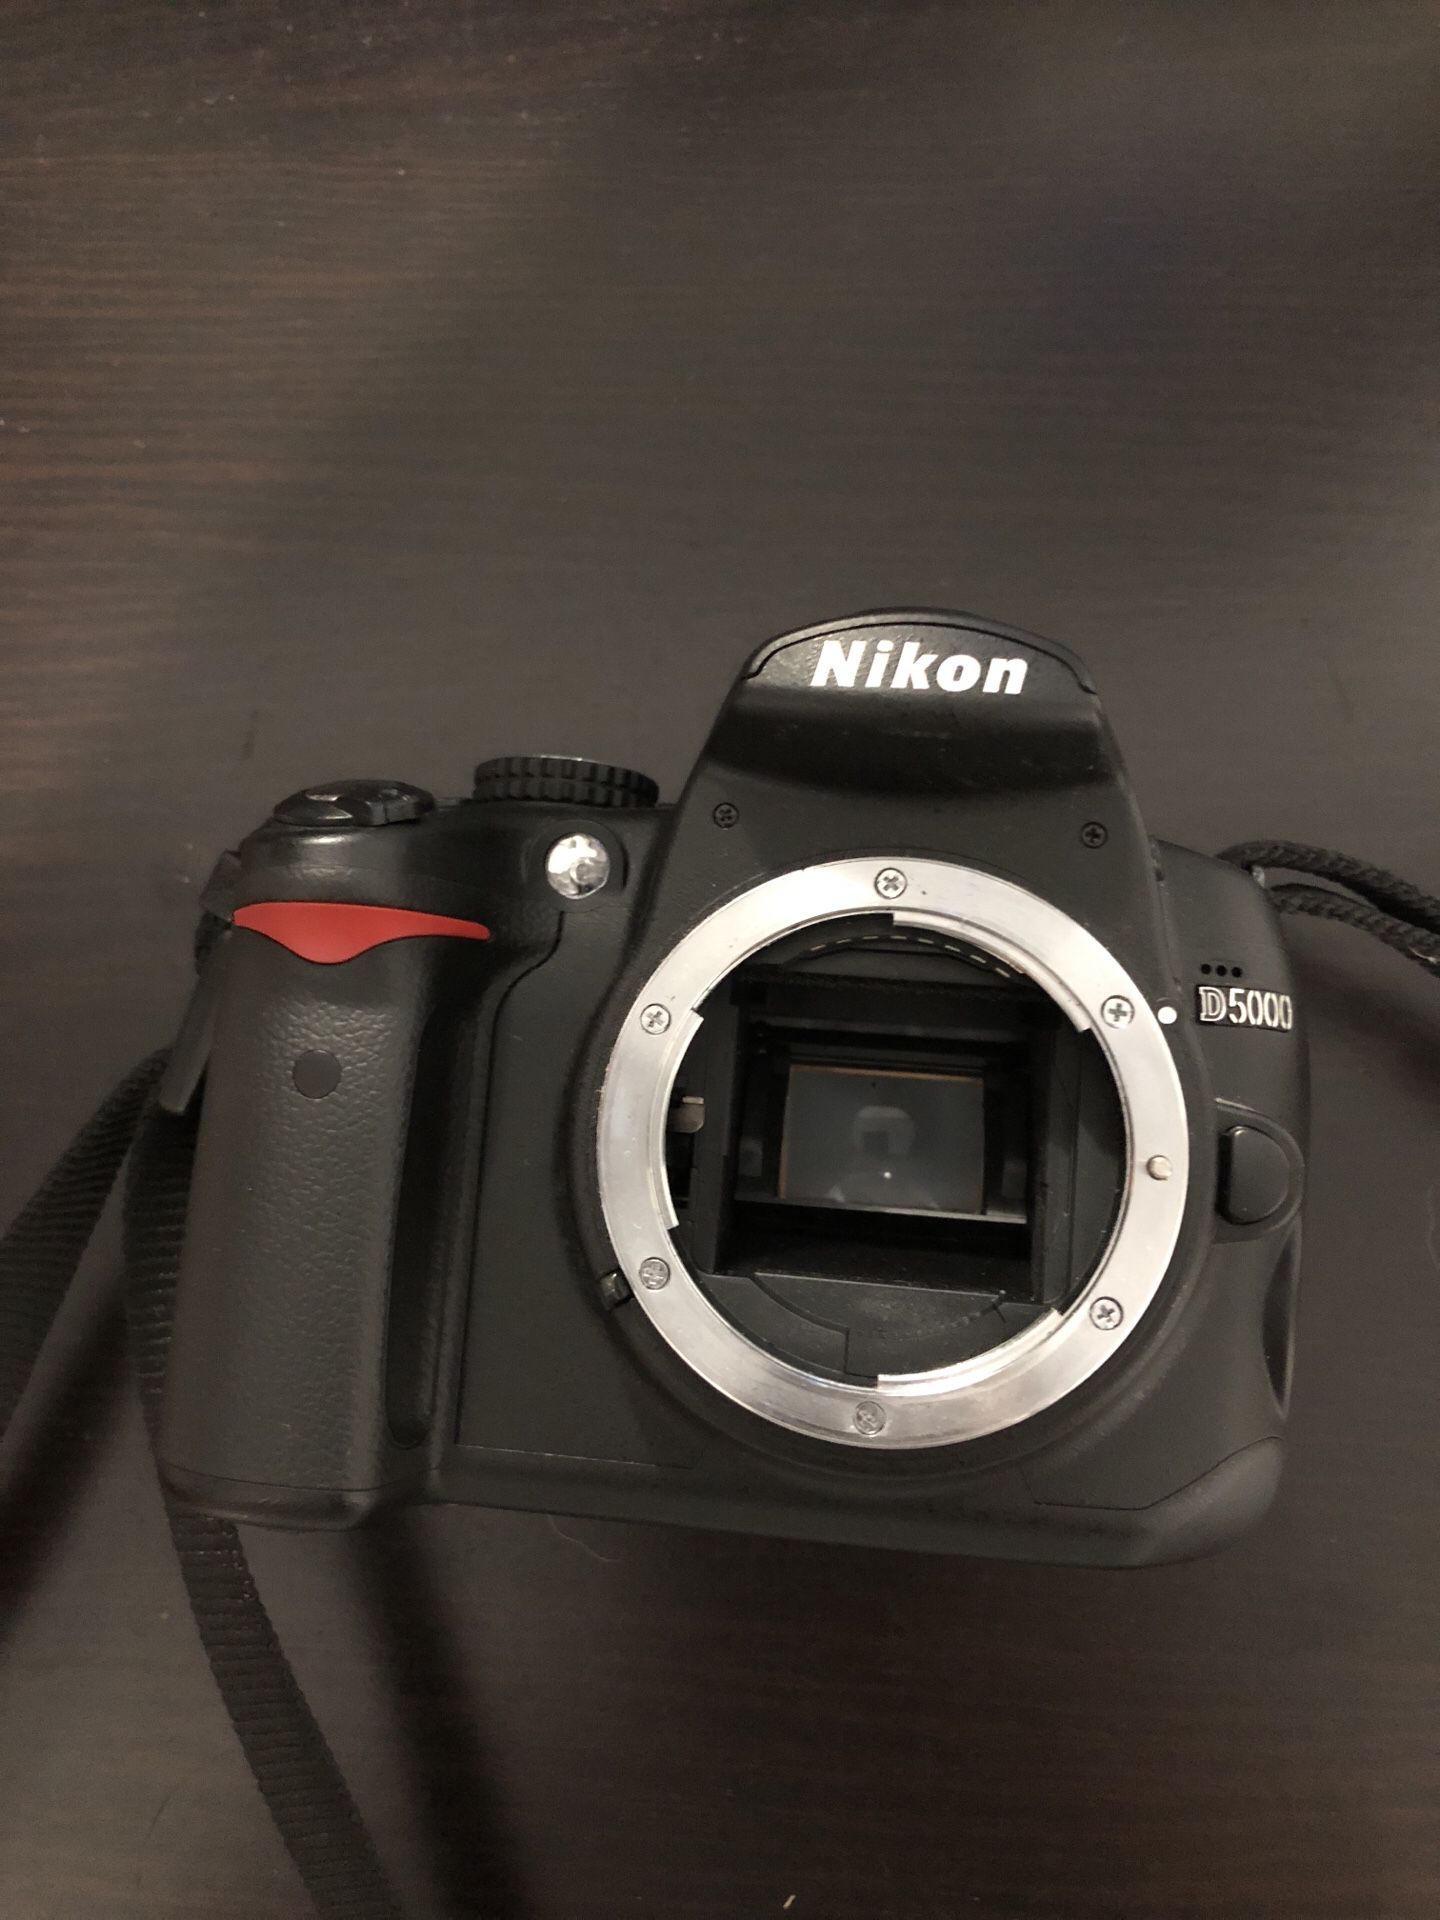 Nikon D5000 with 2 lenses